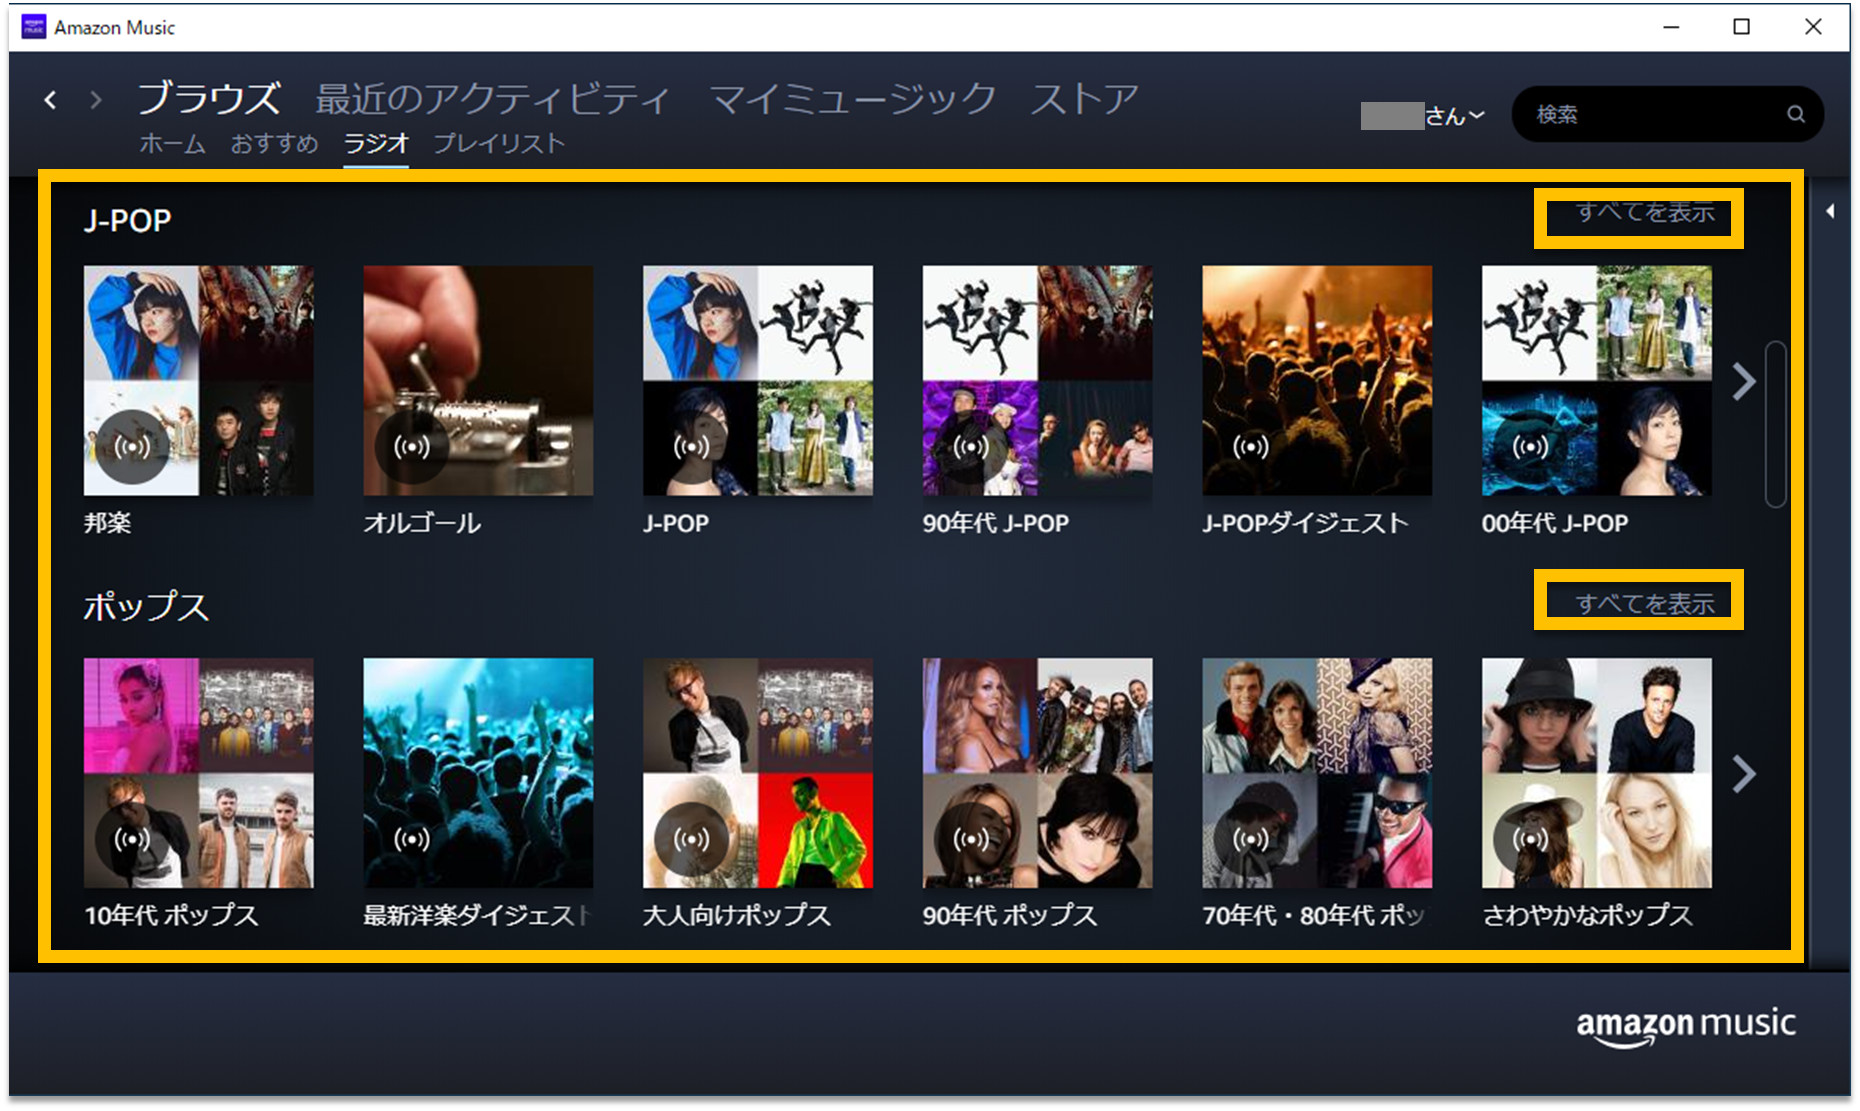 Amazon Music アプリ Windows版の画面のラジオステーション表示画面